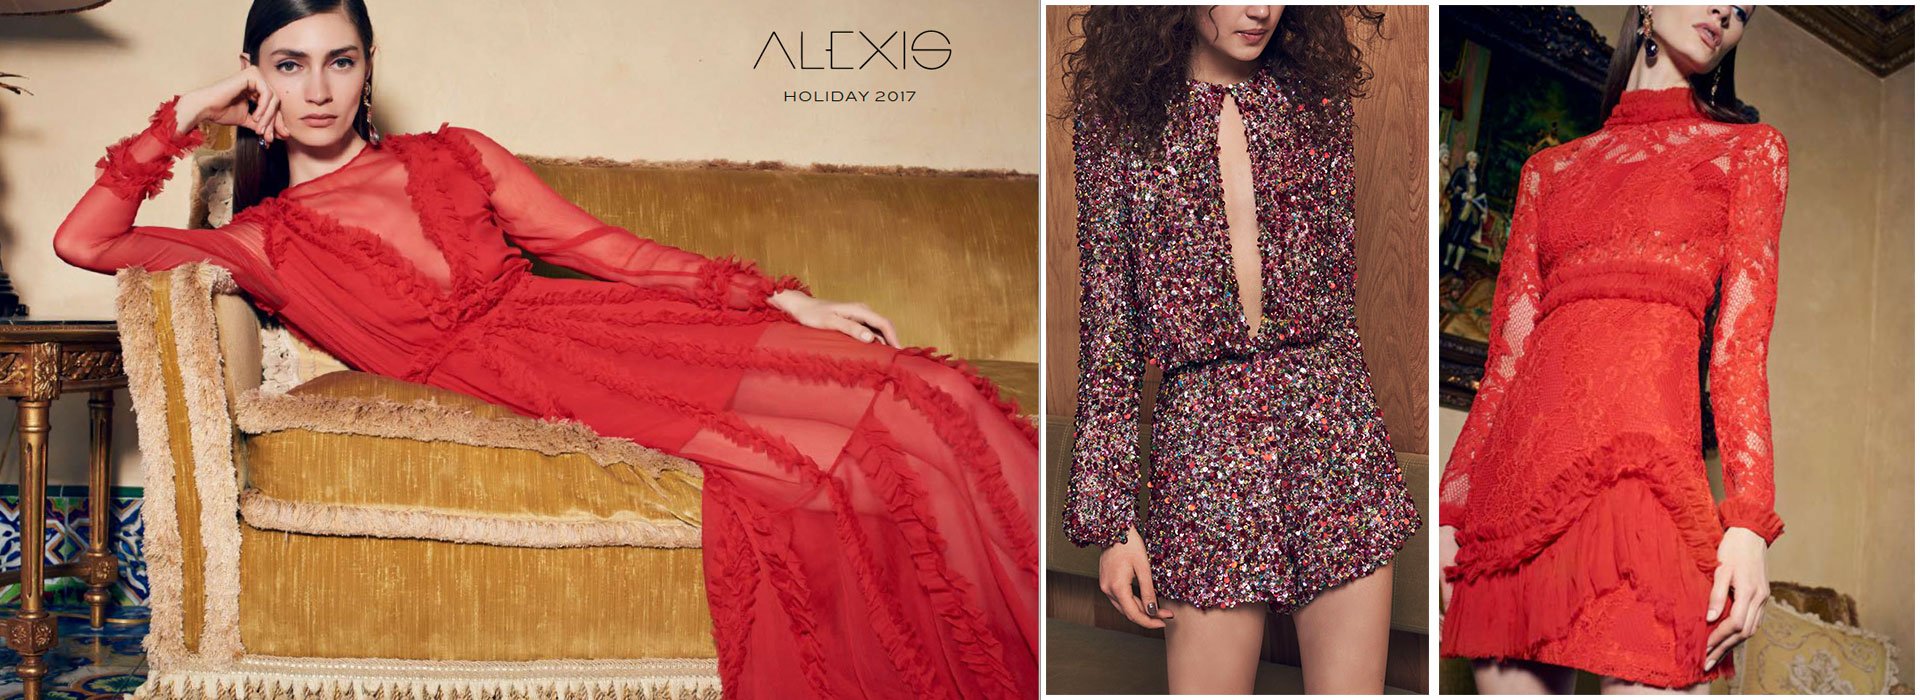 Alexis Couture, Alexis Clothing, Alexis Dresses on Sale, Alexis Rompers, Alexis Jumpsuits, Alexis New Arrivals